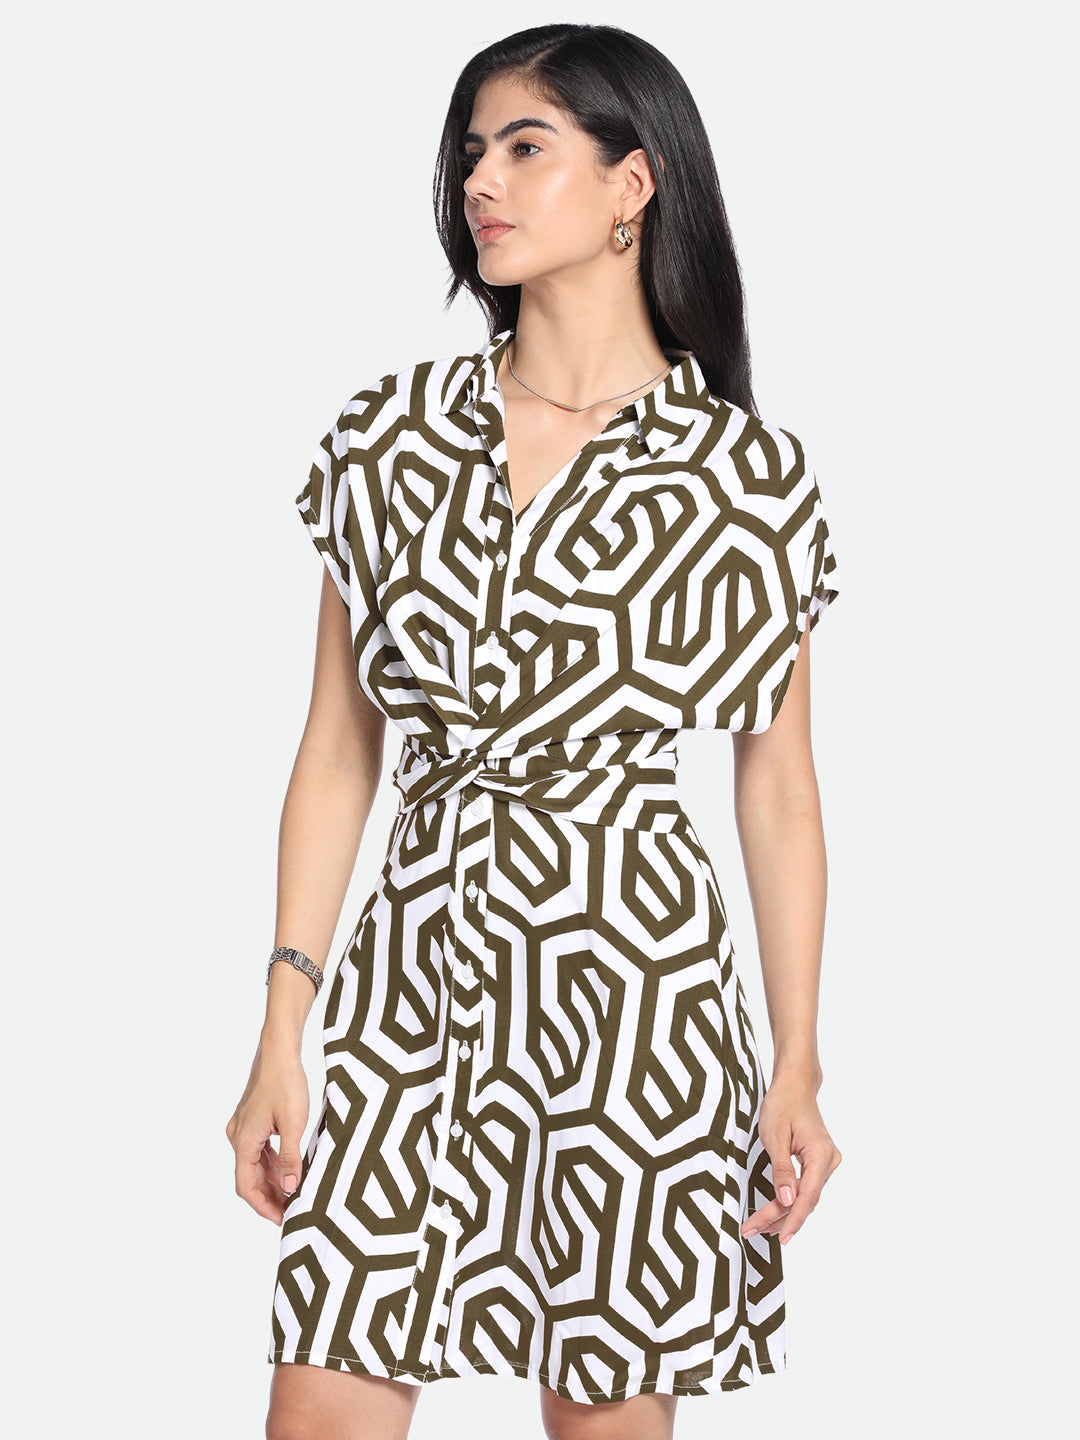 DL Woman Brown Geometric Printed Shirt Style Dress